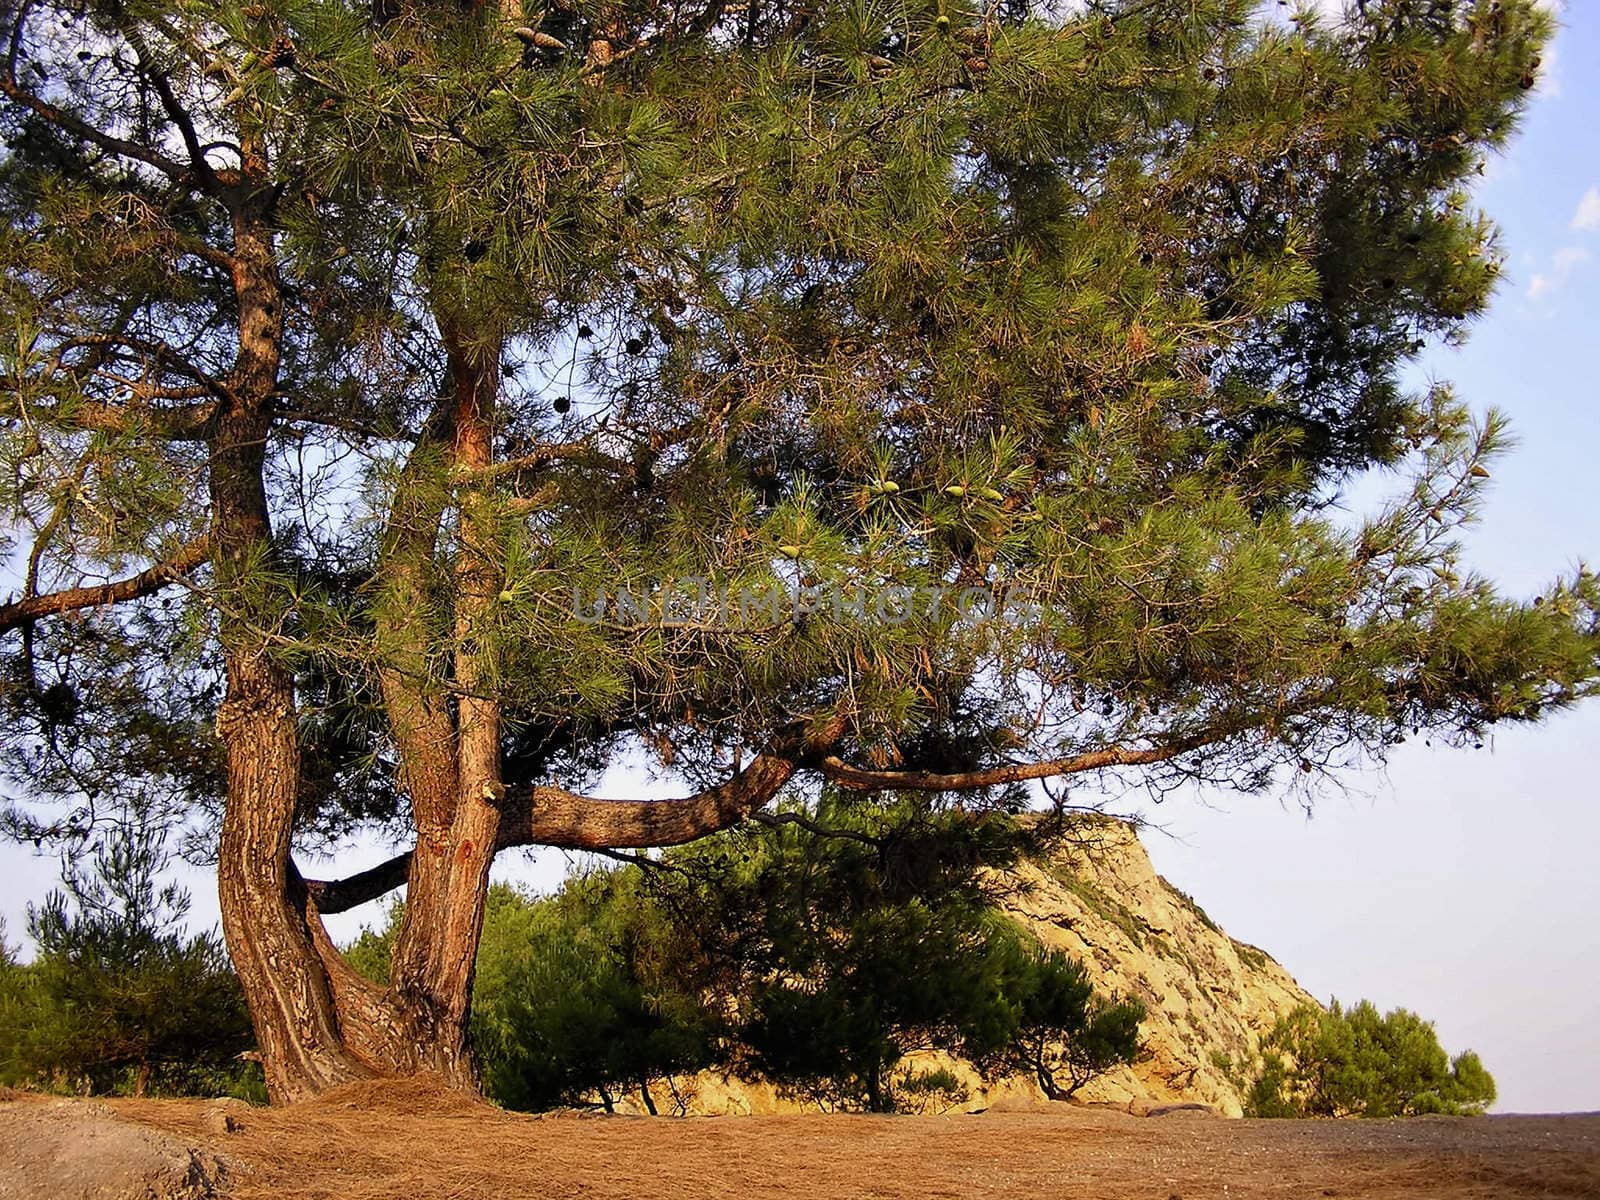 Pine Tree At sunset by penta